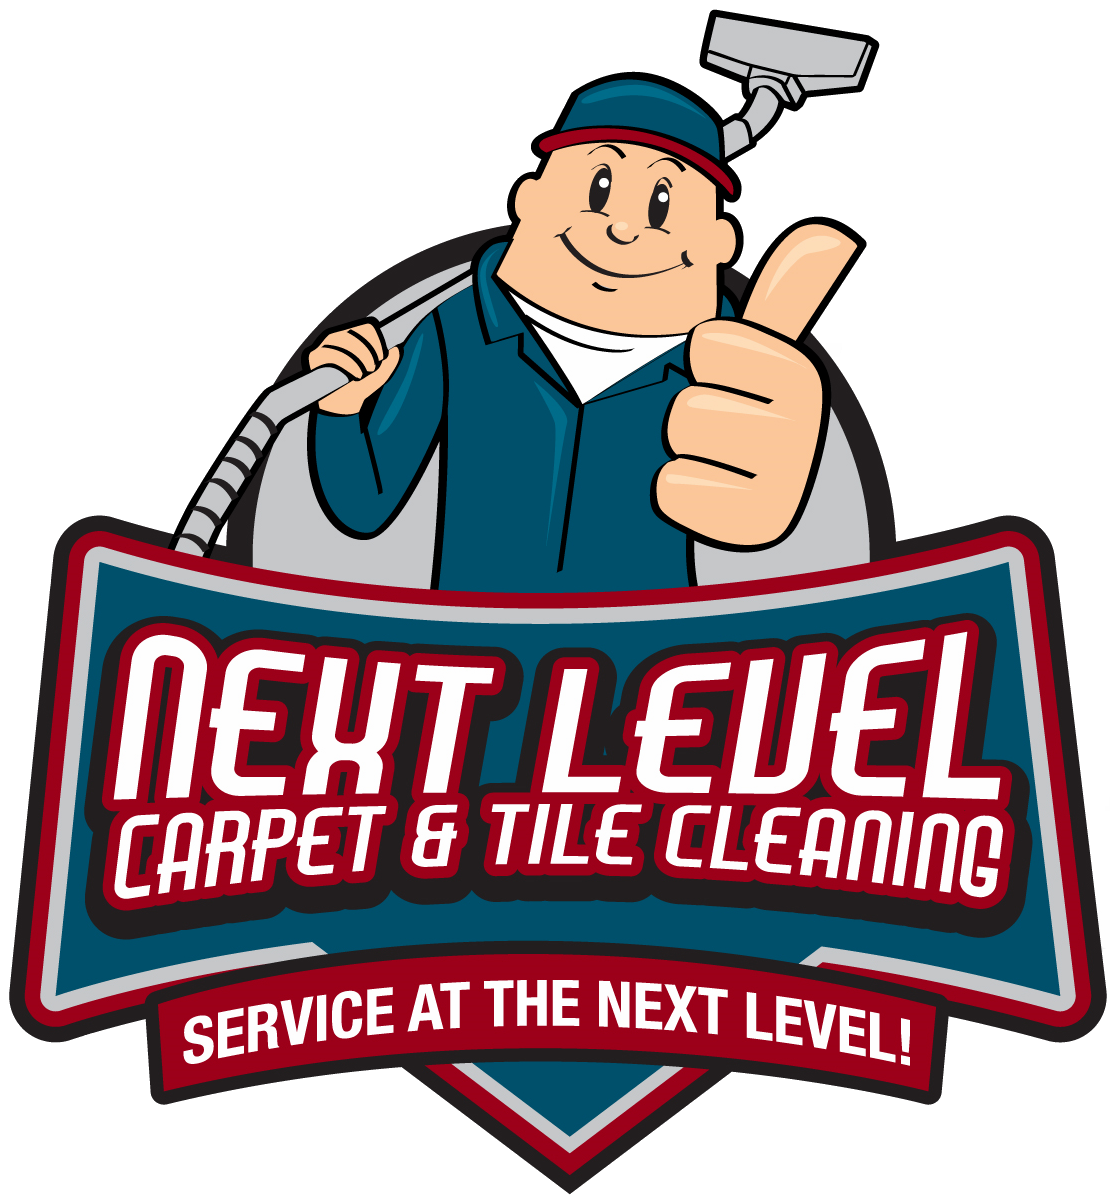 60863_Next Level Carpet & Tile Cleaning_rev2.png